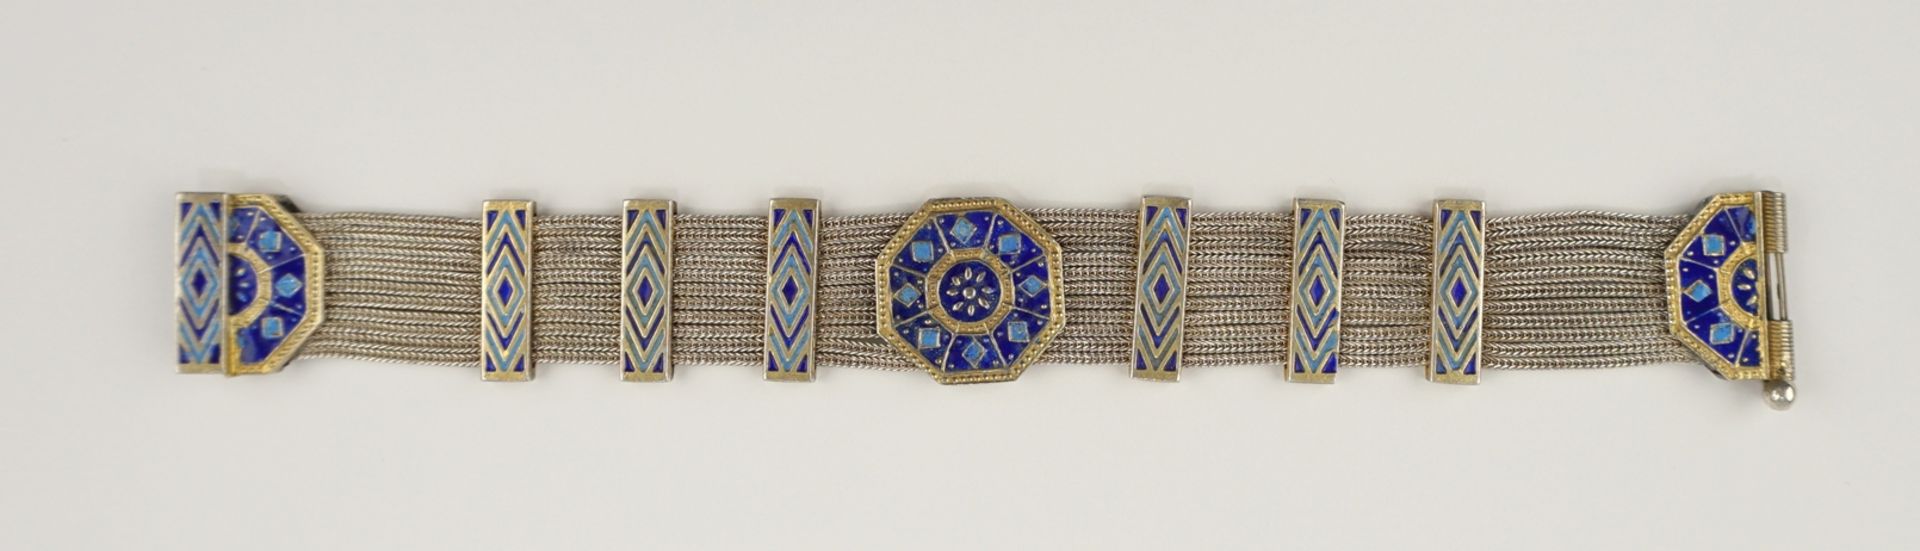 mehrstrangiges Armband mit Emaille, 900er Silber, wohl Russland, 1.Hälfte 20.Jh.